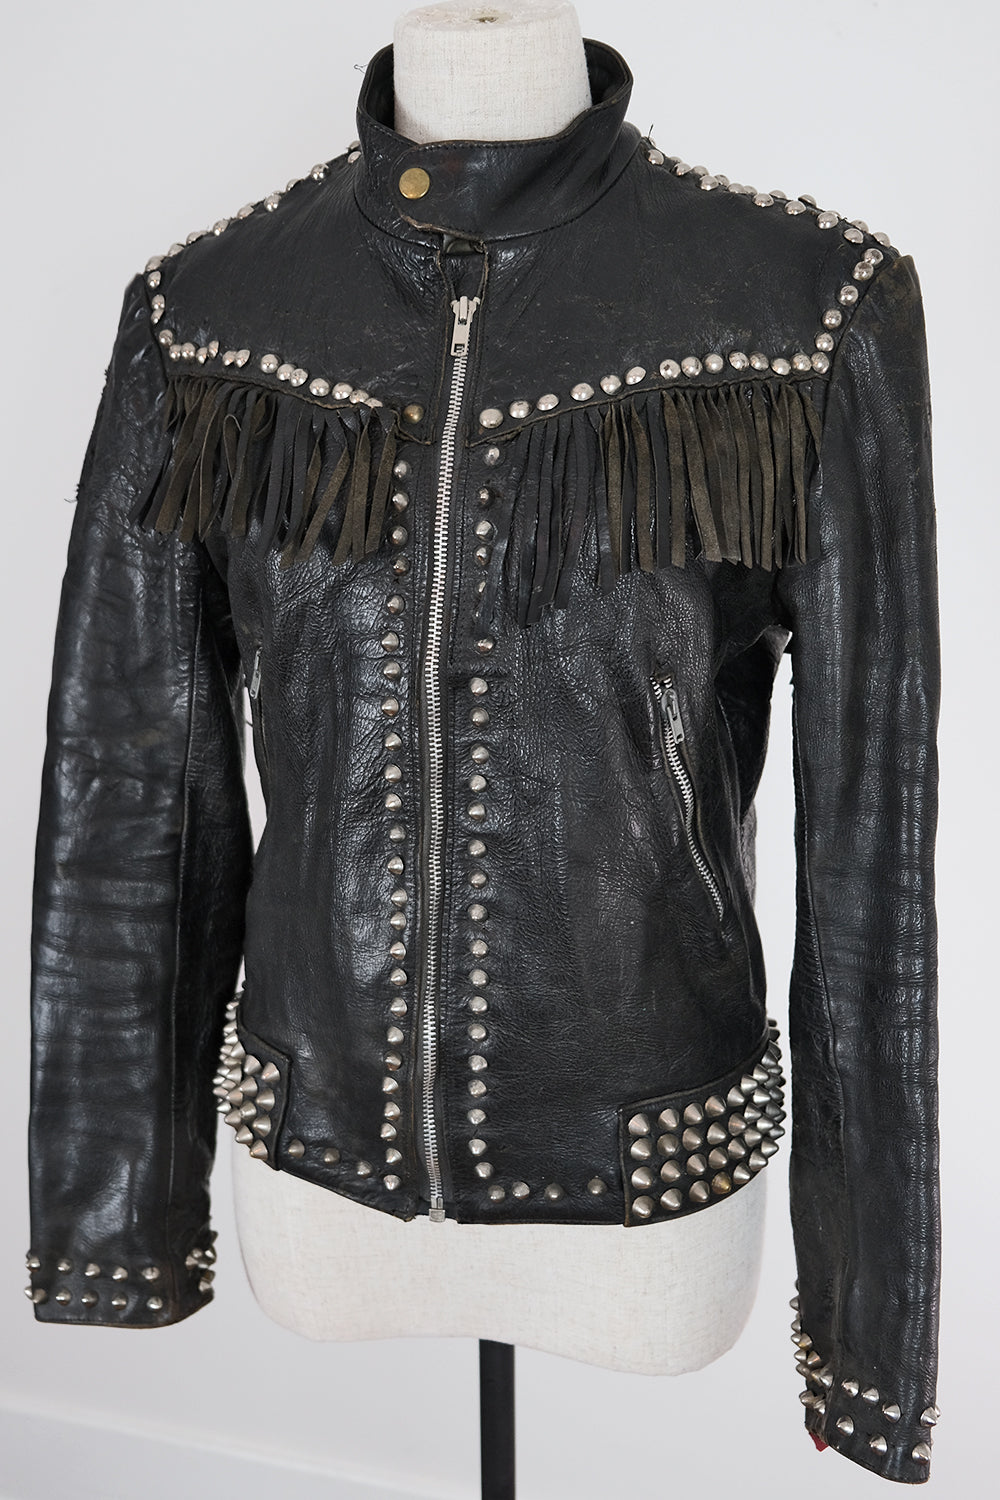 OOAK Customized Vintage Leather Jacket #3